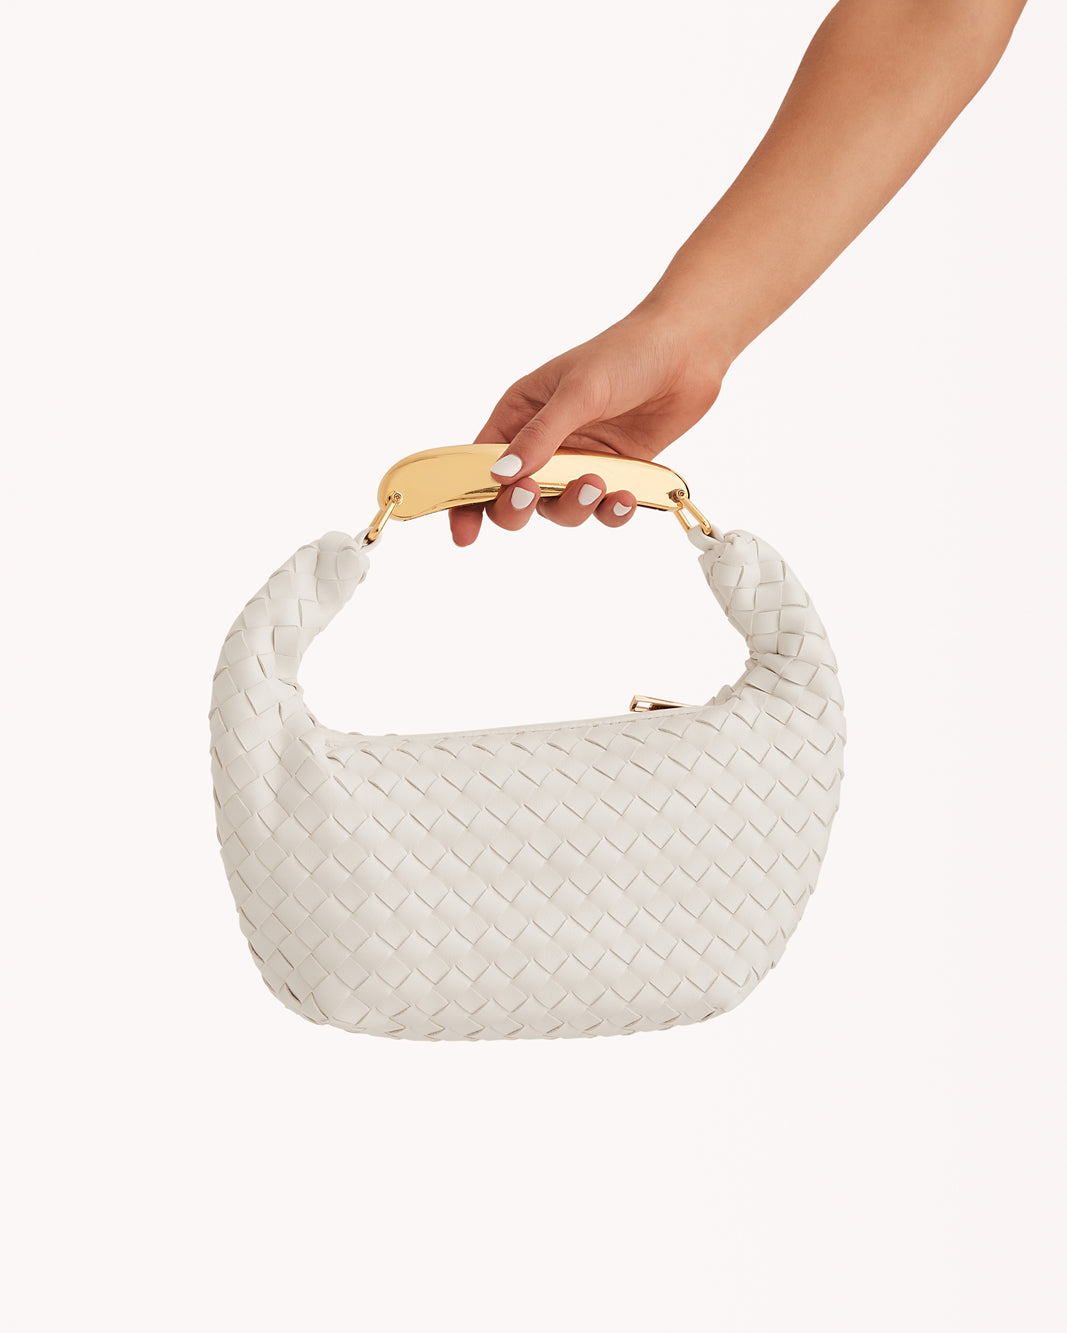 KARA HANDLE BAG - BONE-Handbags-Billini-O/S-Billini